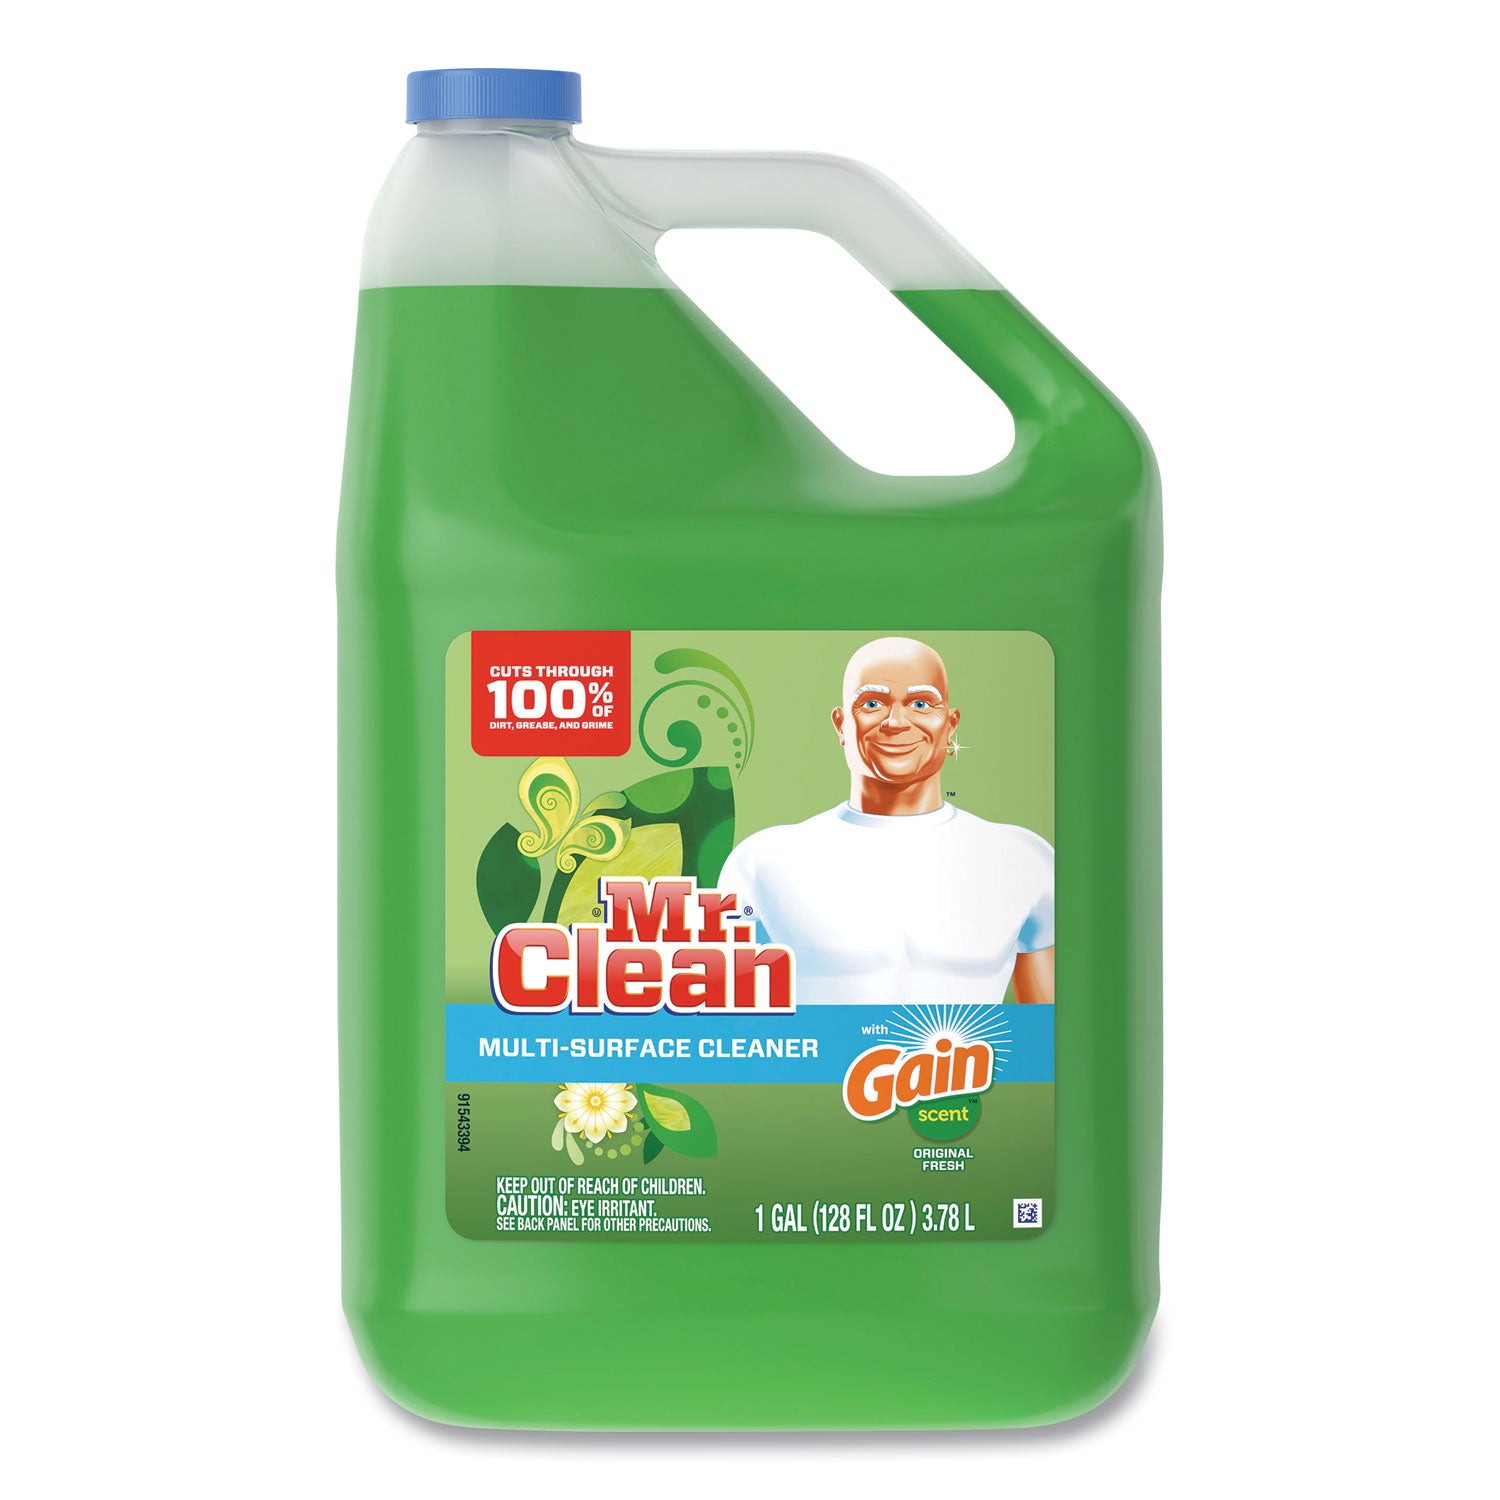 multipurpose-cleaning-solution-128-oz-bottle-gain-original-scent_pgc96435 - 1